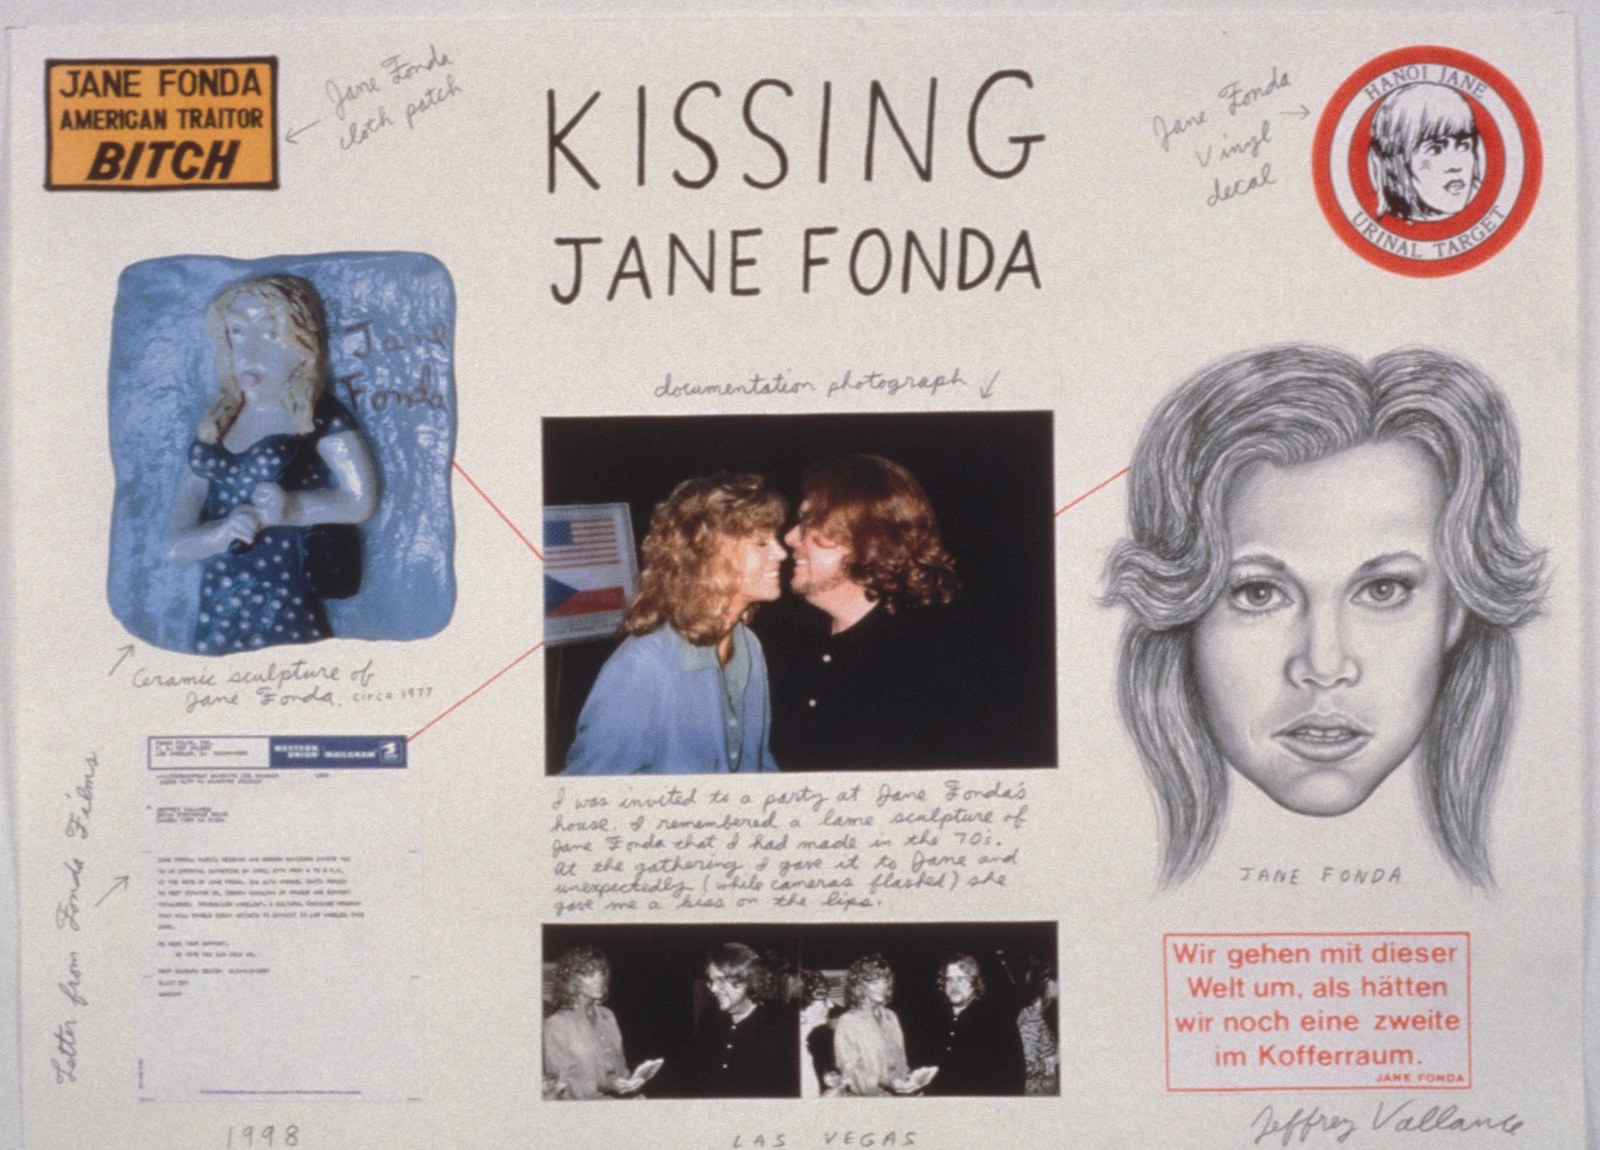 JEFFREY VALLANCE, Kissing Jane Fonda, 1998